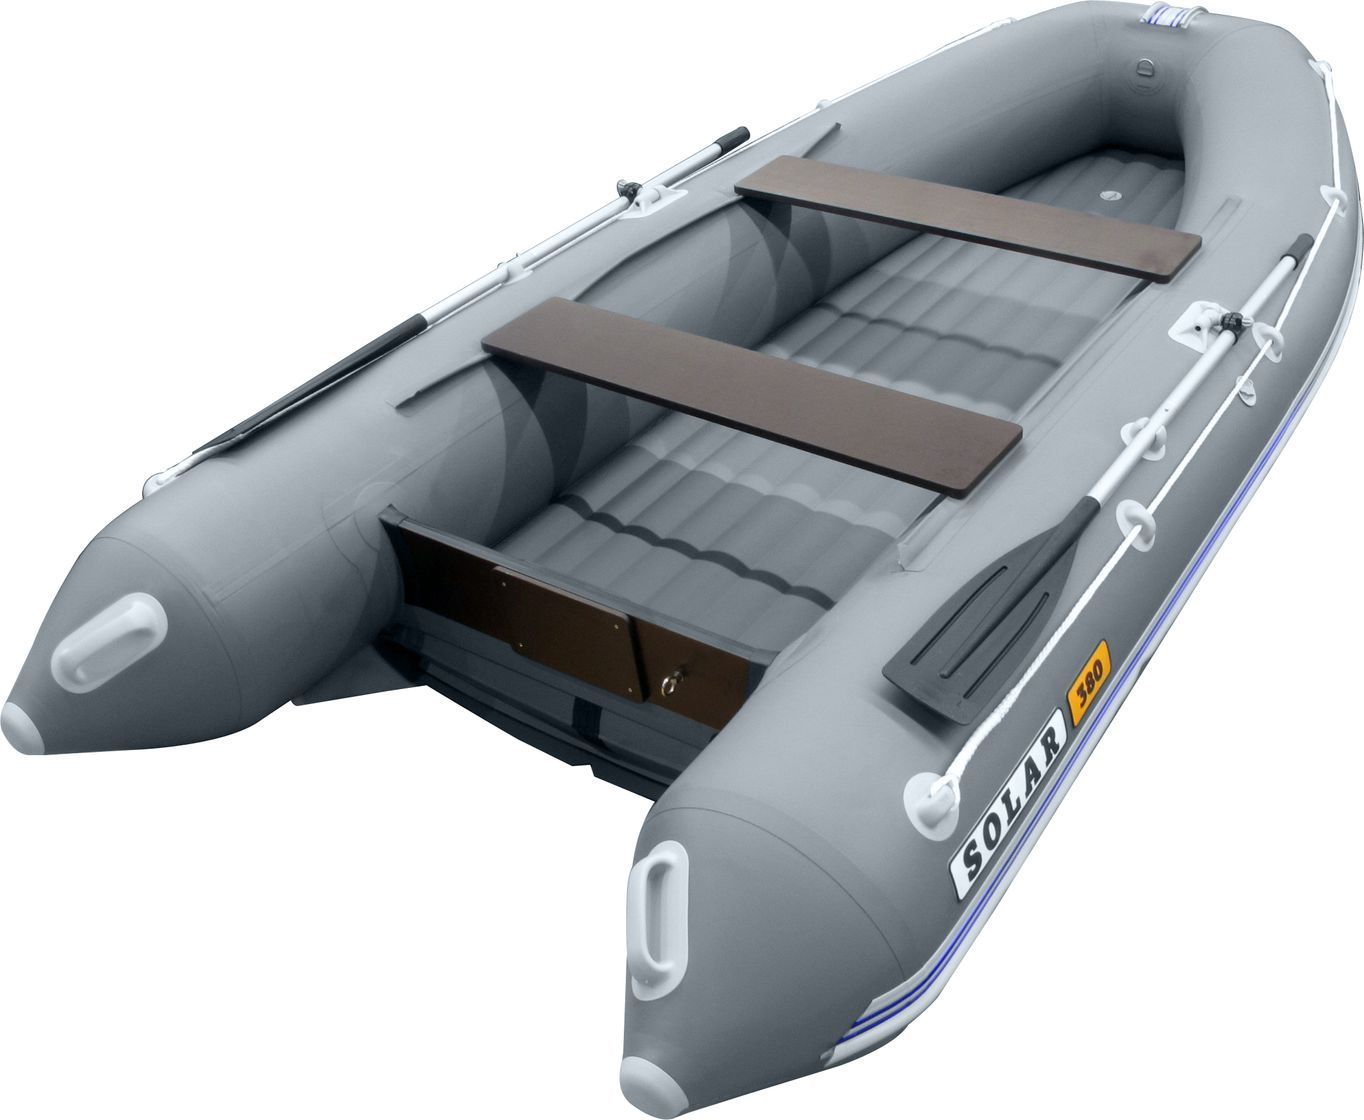 Надувная лодка ПВХ SOLAR-330 К (Оптима), серый SLR330k_opt_grey надувная лодка пвх solar 330 к оптима синий slr330k opt blue